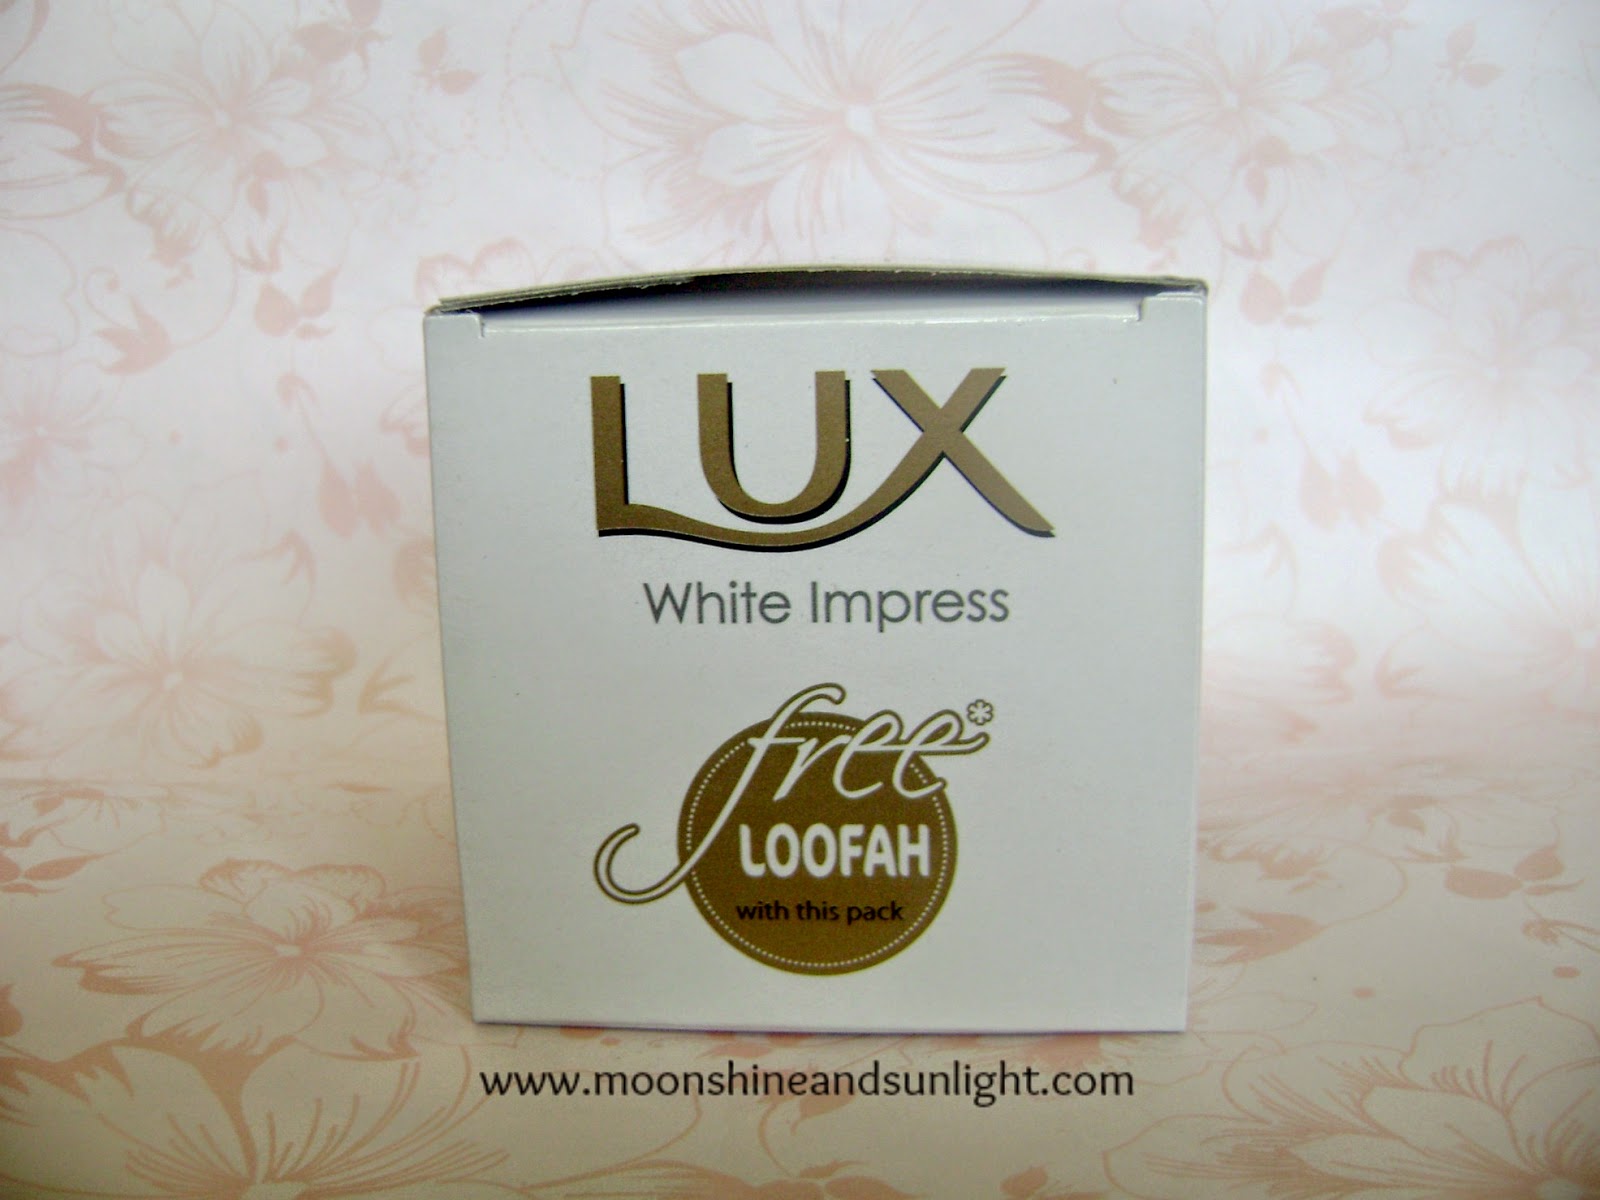 LUX White Impress bodywash review ,socialnoise